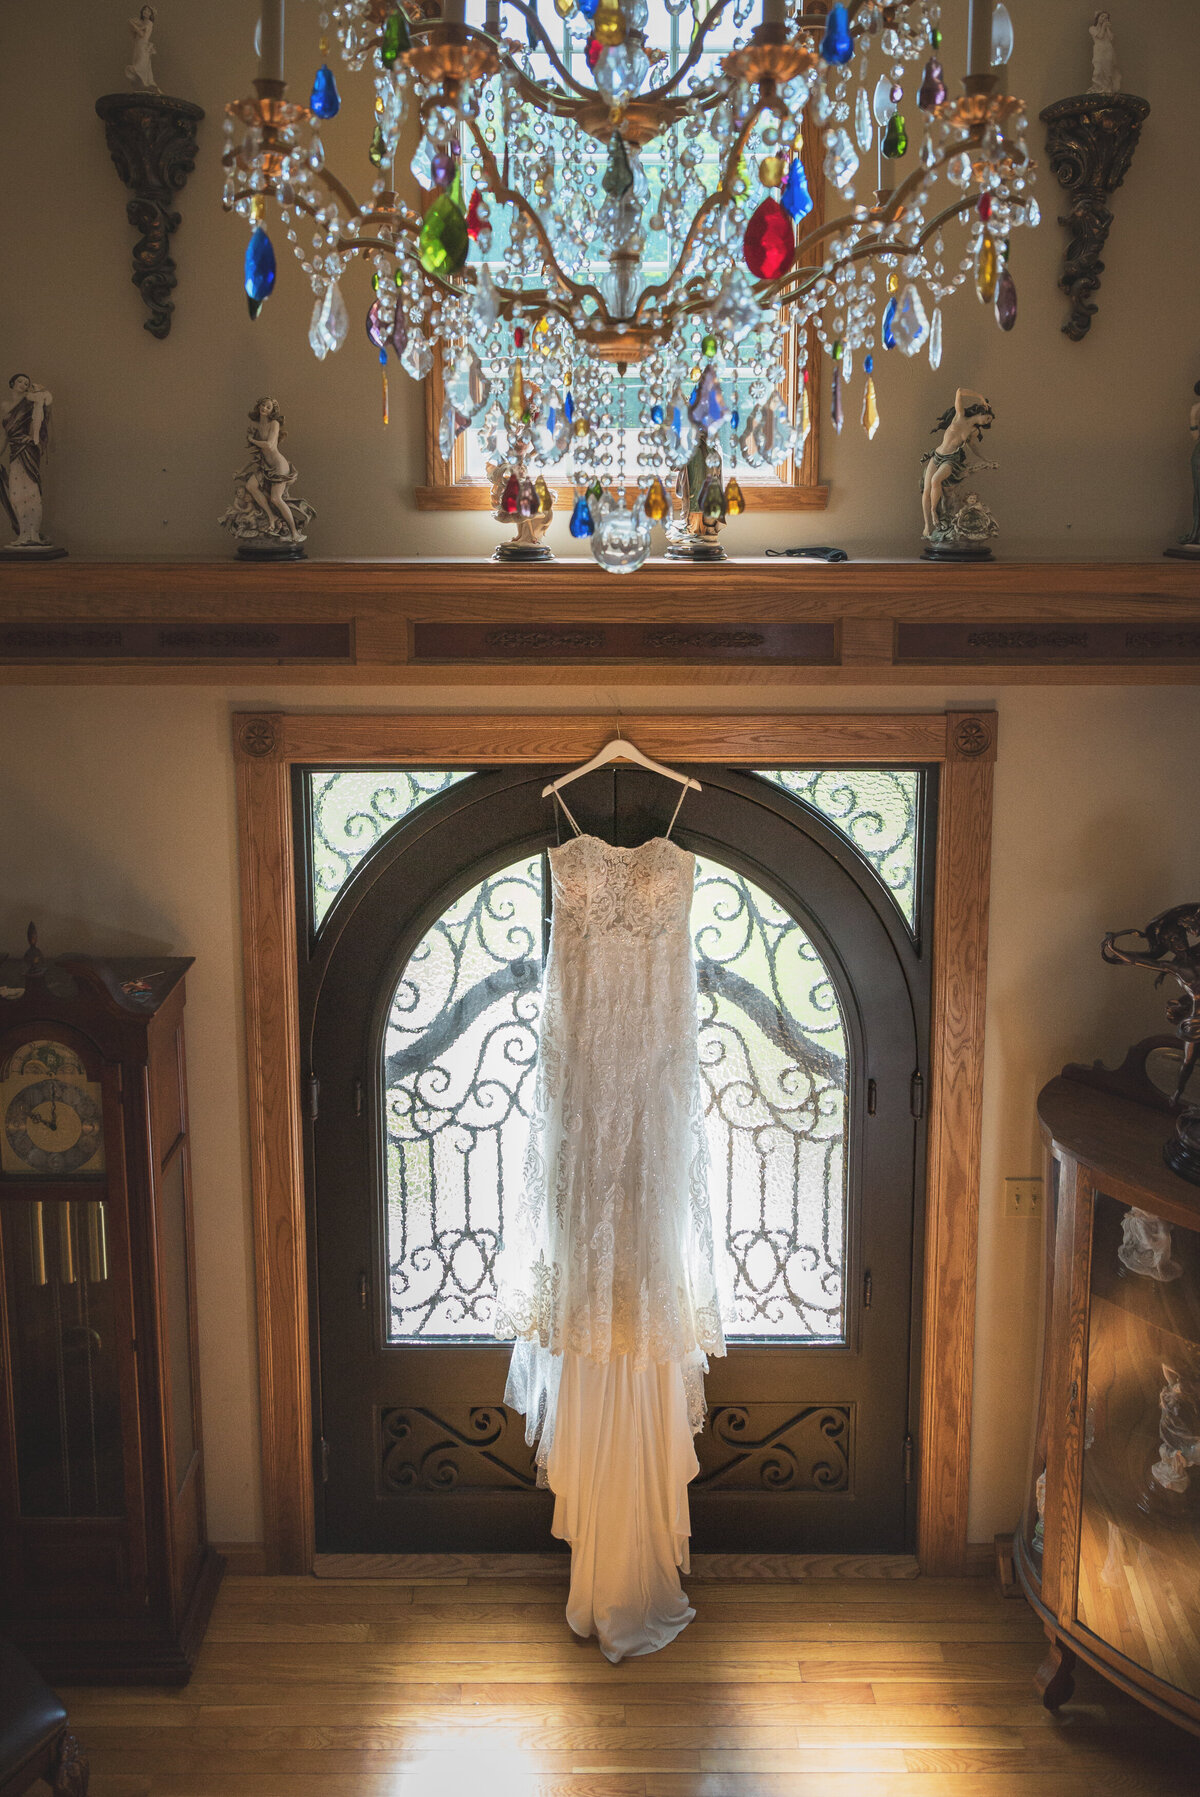 Wedding dress hanging below colorful chandelier.